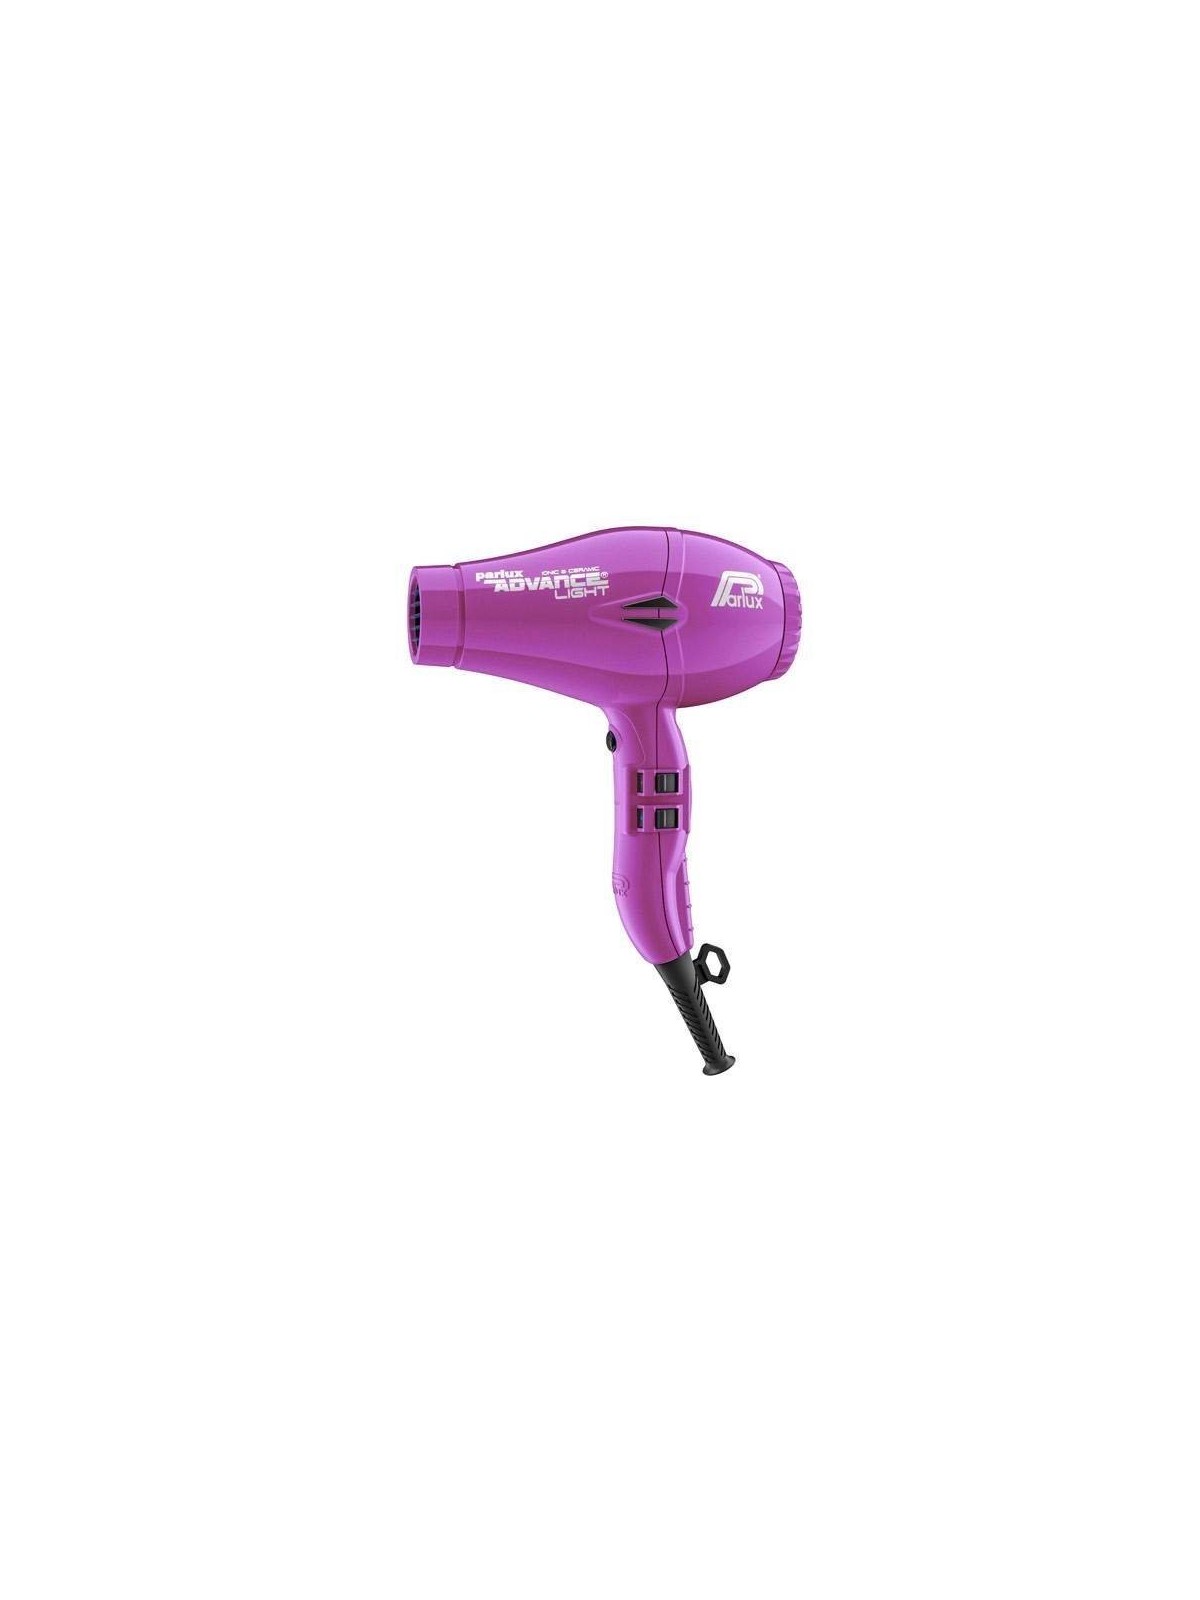 Secador parlux advance light violeta